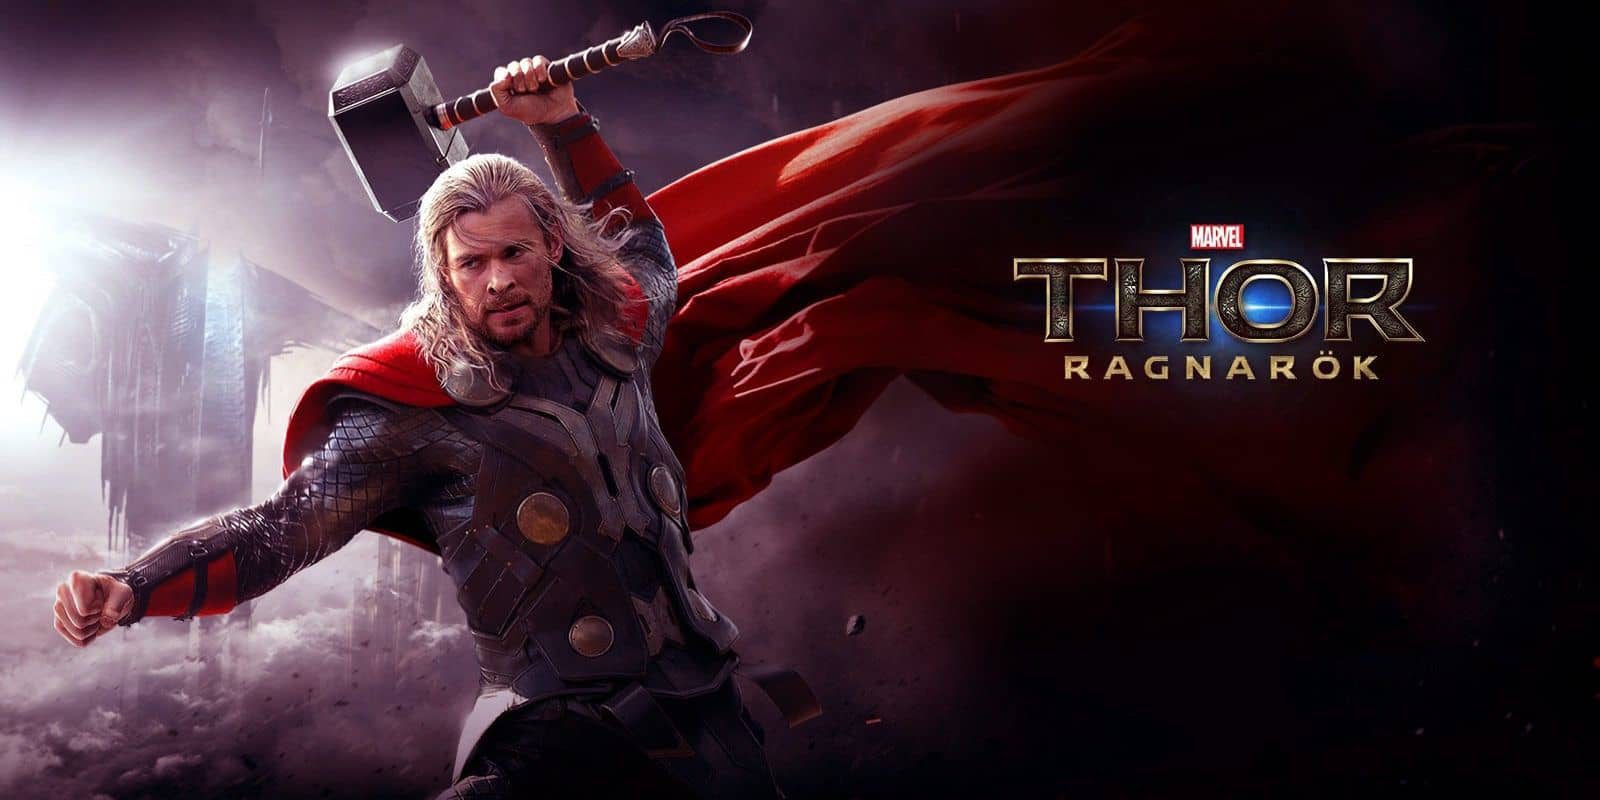 Marvel revela el aspecto de Thor para su tercera película, 'Thor: Ragnarok'